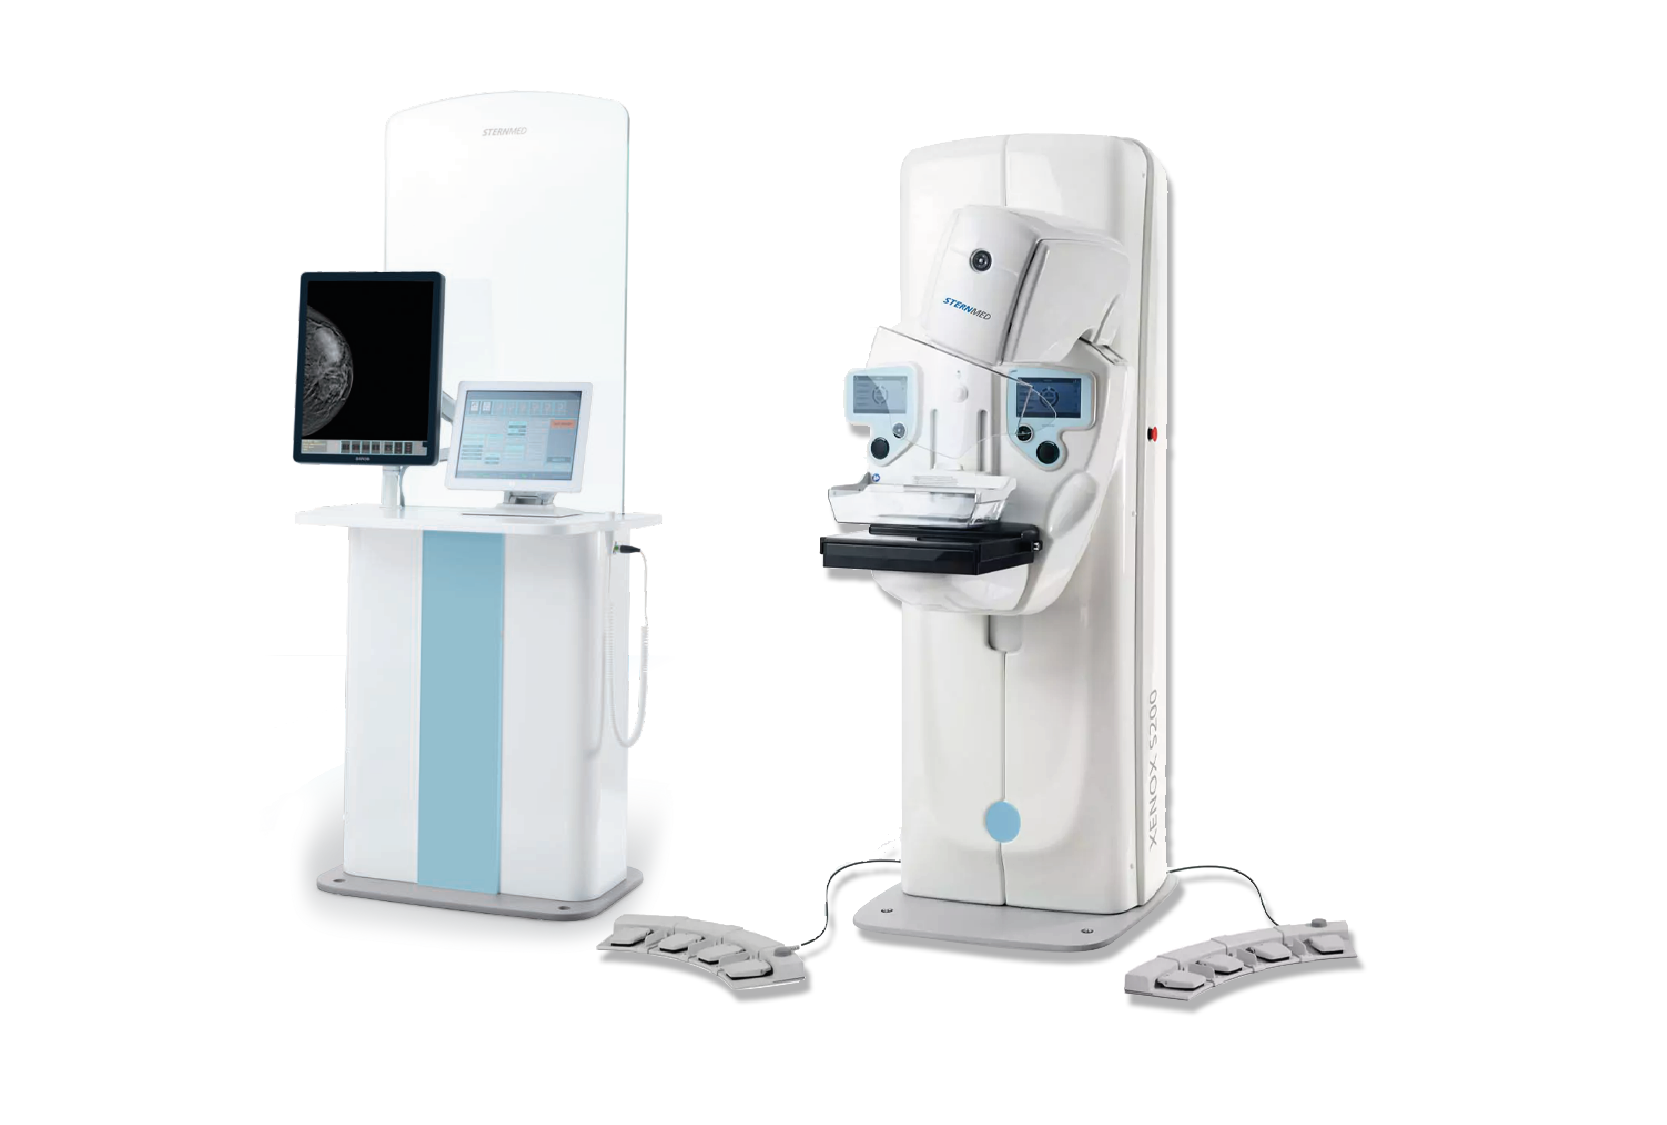 Xenox S200 Digital mammography system